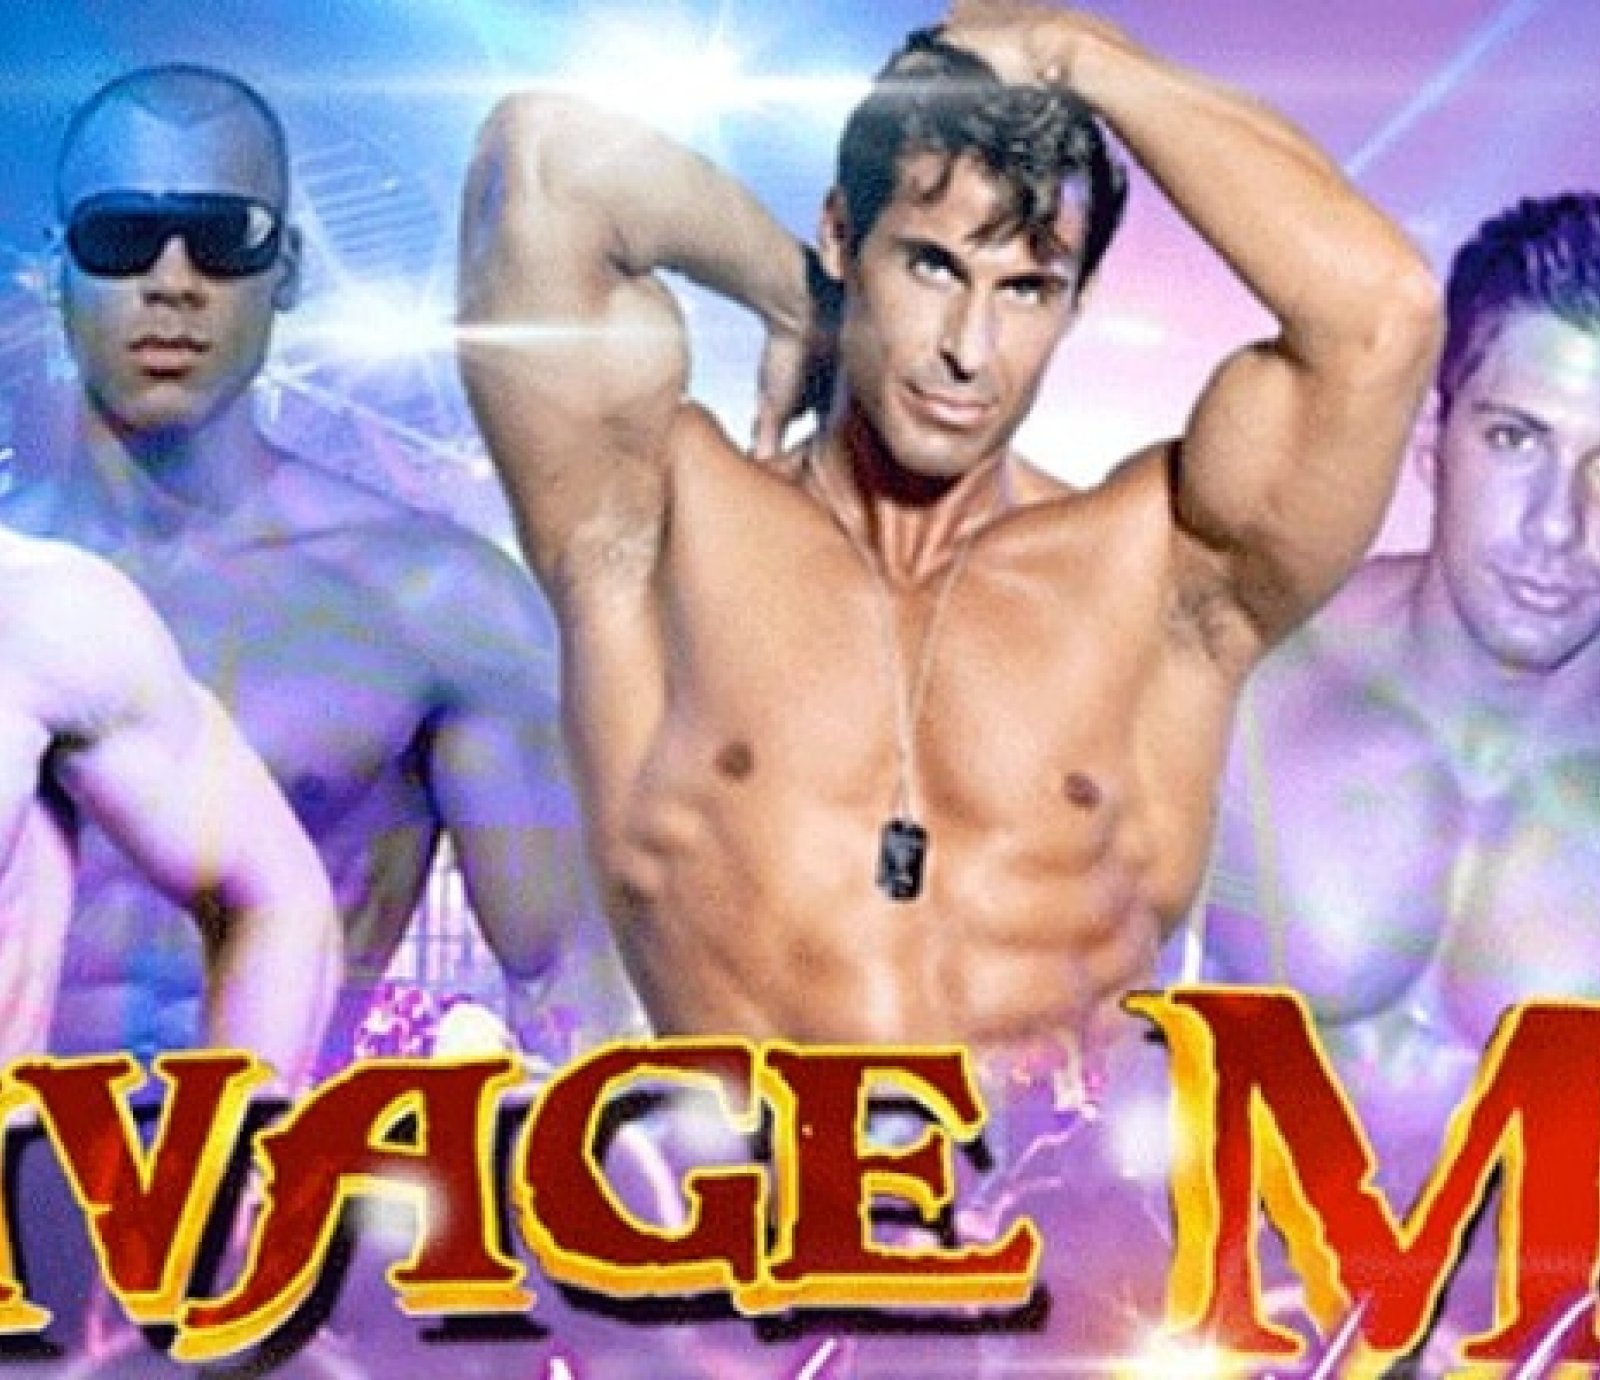 Savage Men Male Revue - Hollywood